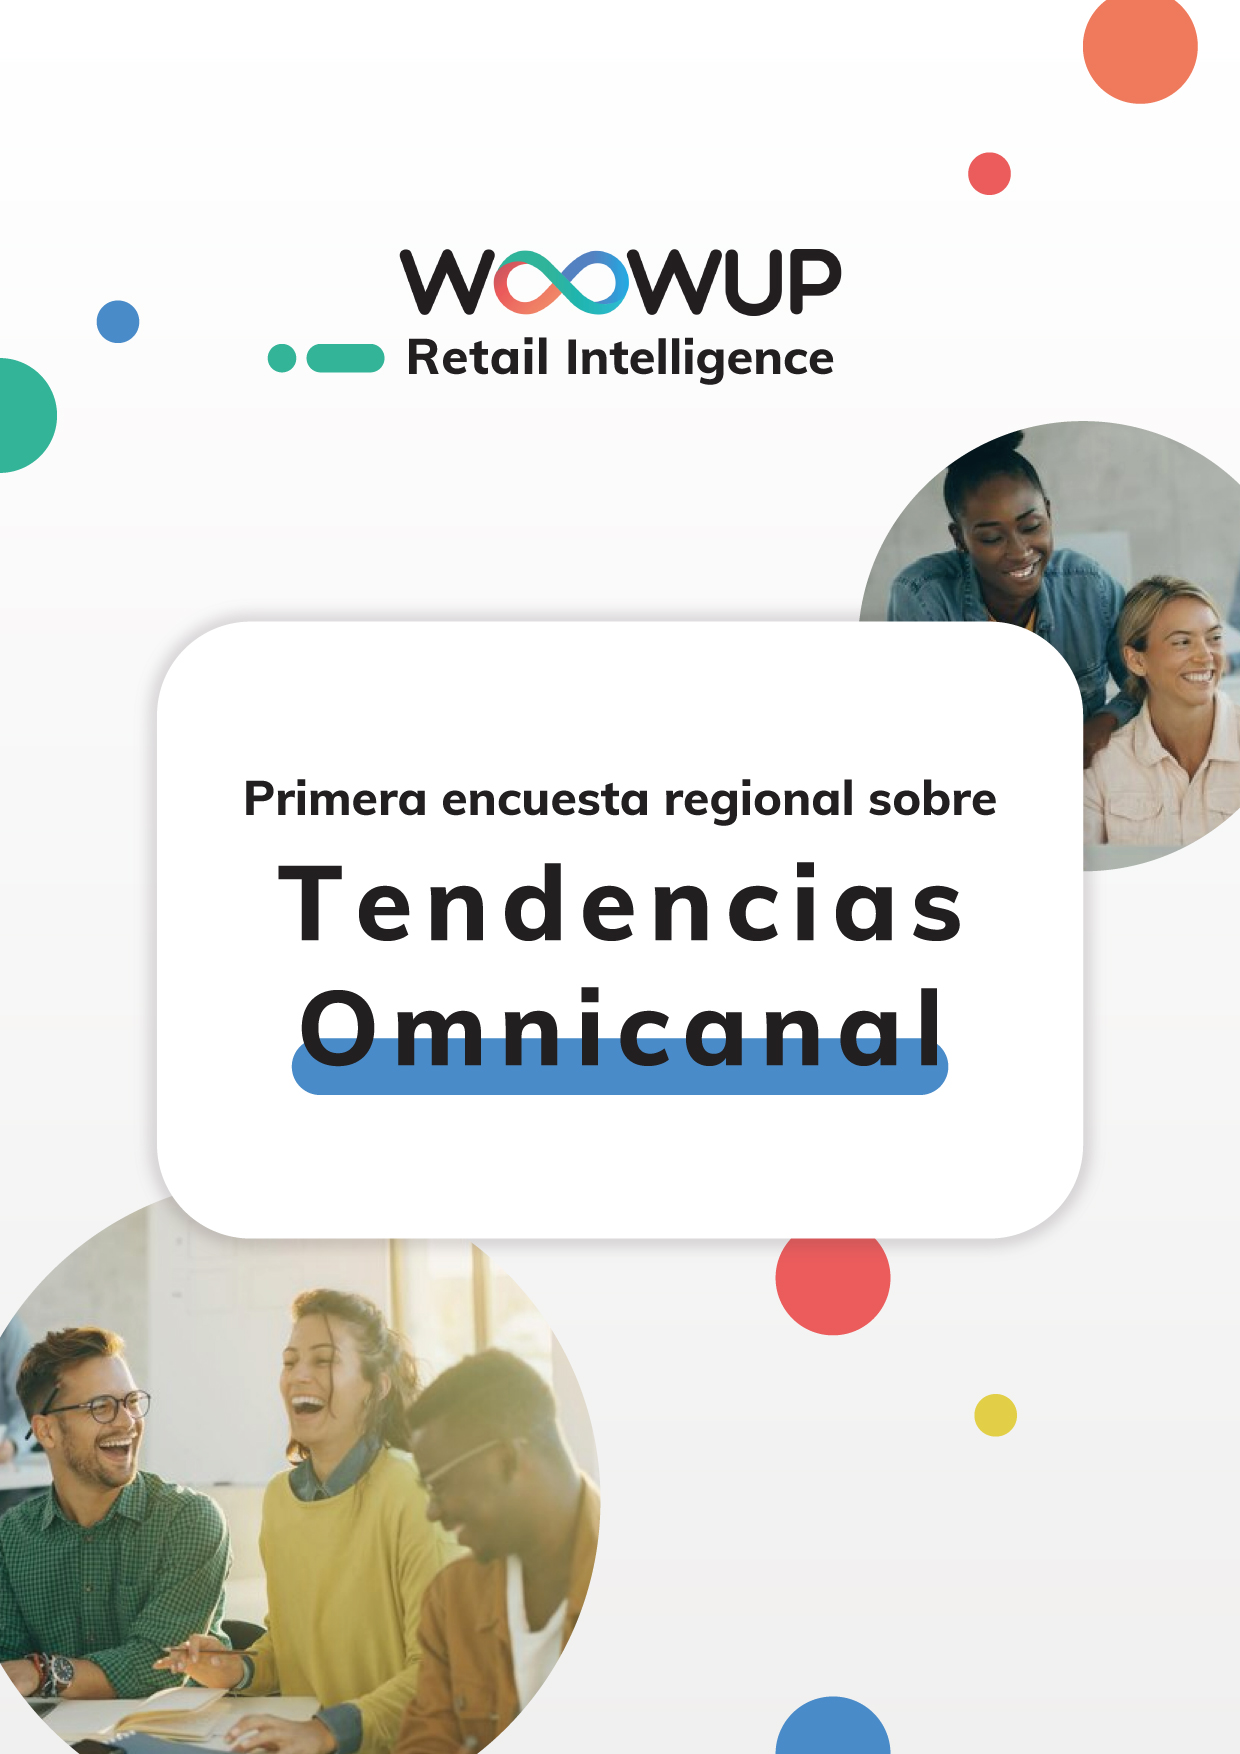 WoowUp Primer encuesta regional marketing omnicanal